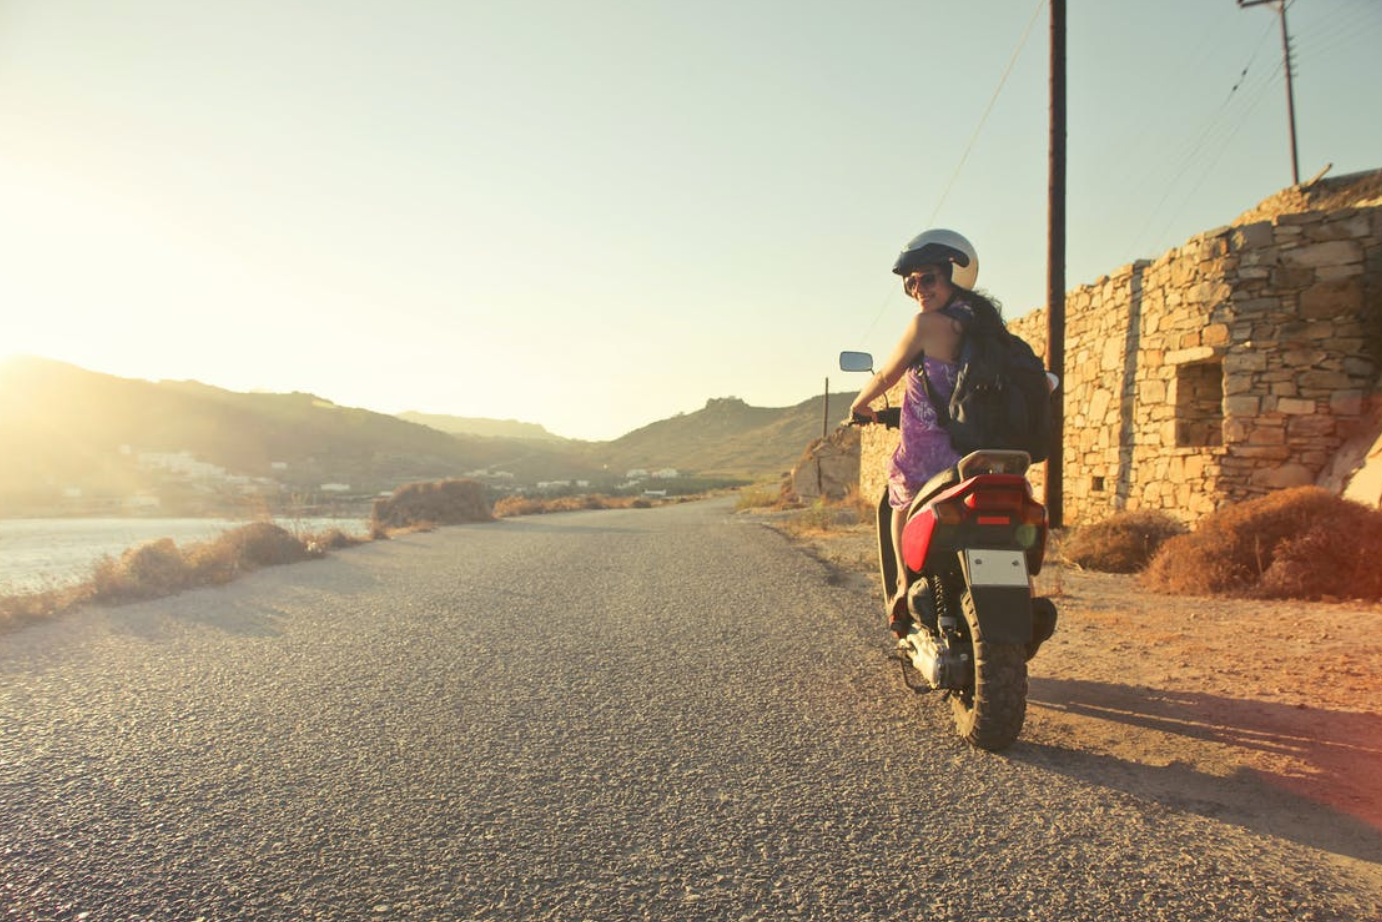 Woman riding motorcycle; image by Andrea Piacquadio, via Pexels.com.